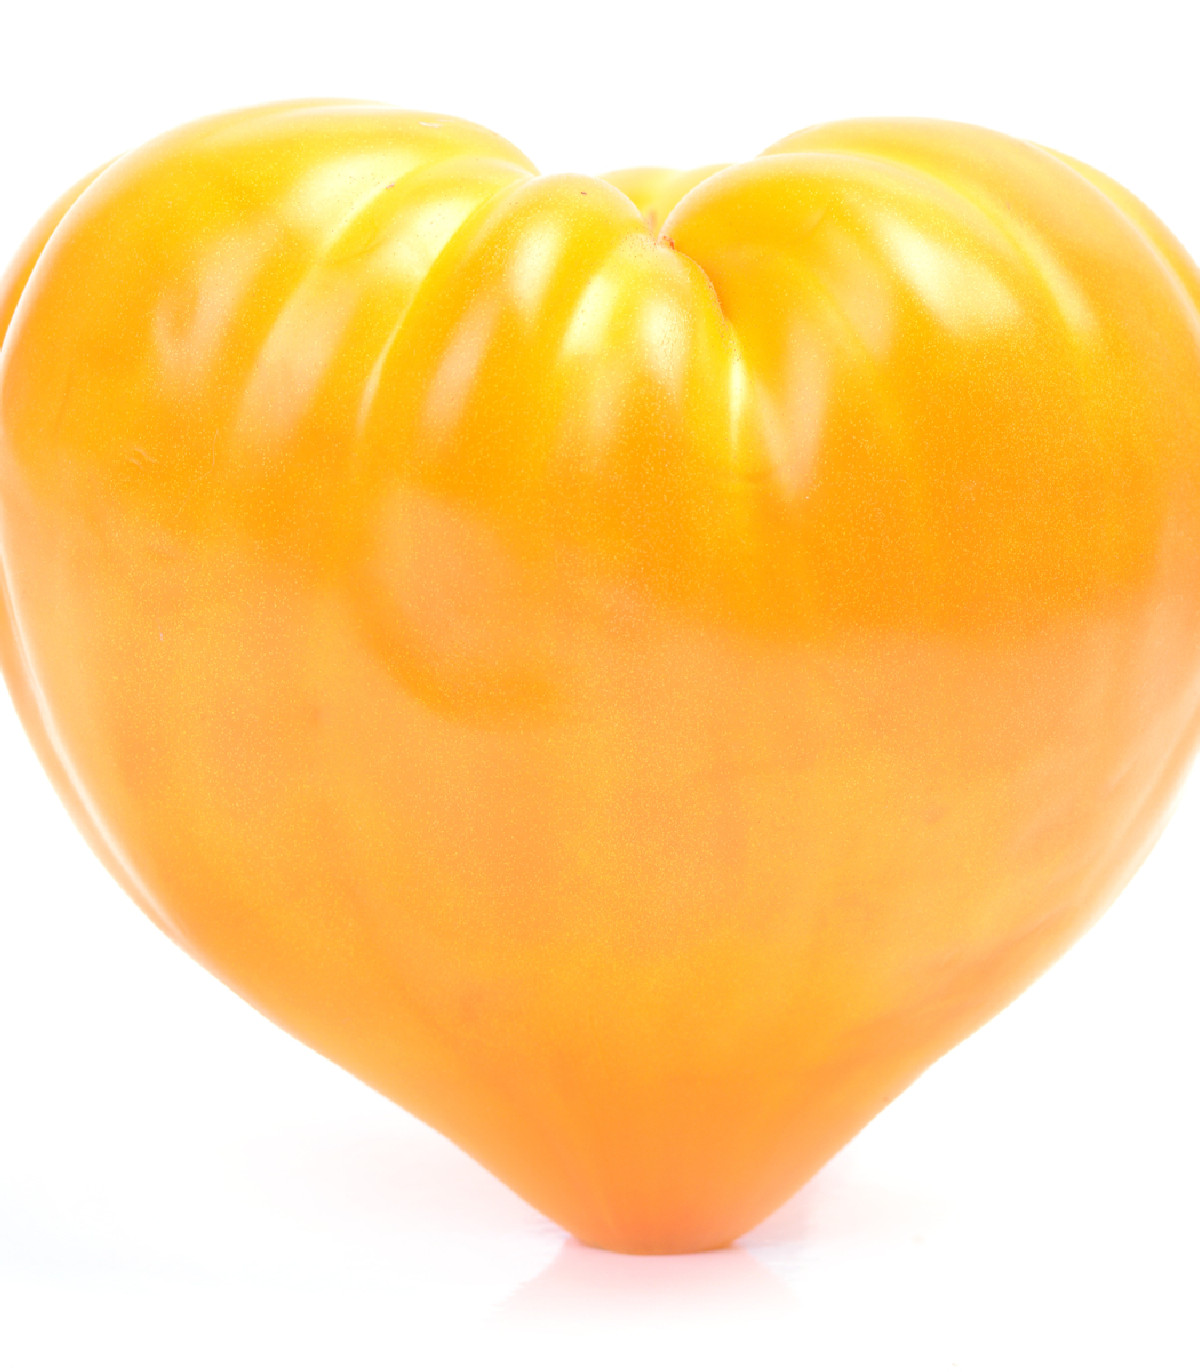 Rajče Oxheart Orange - Solanum lycopersicum - osivo rajčat - 10 ks